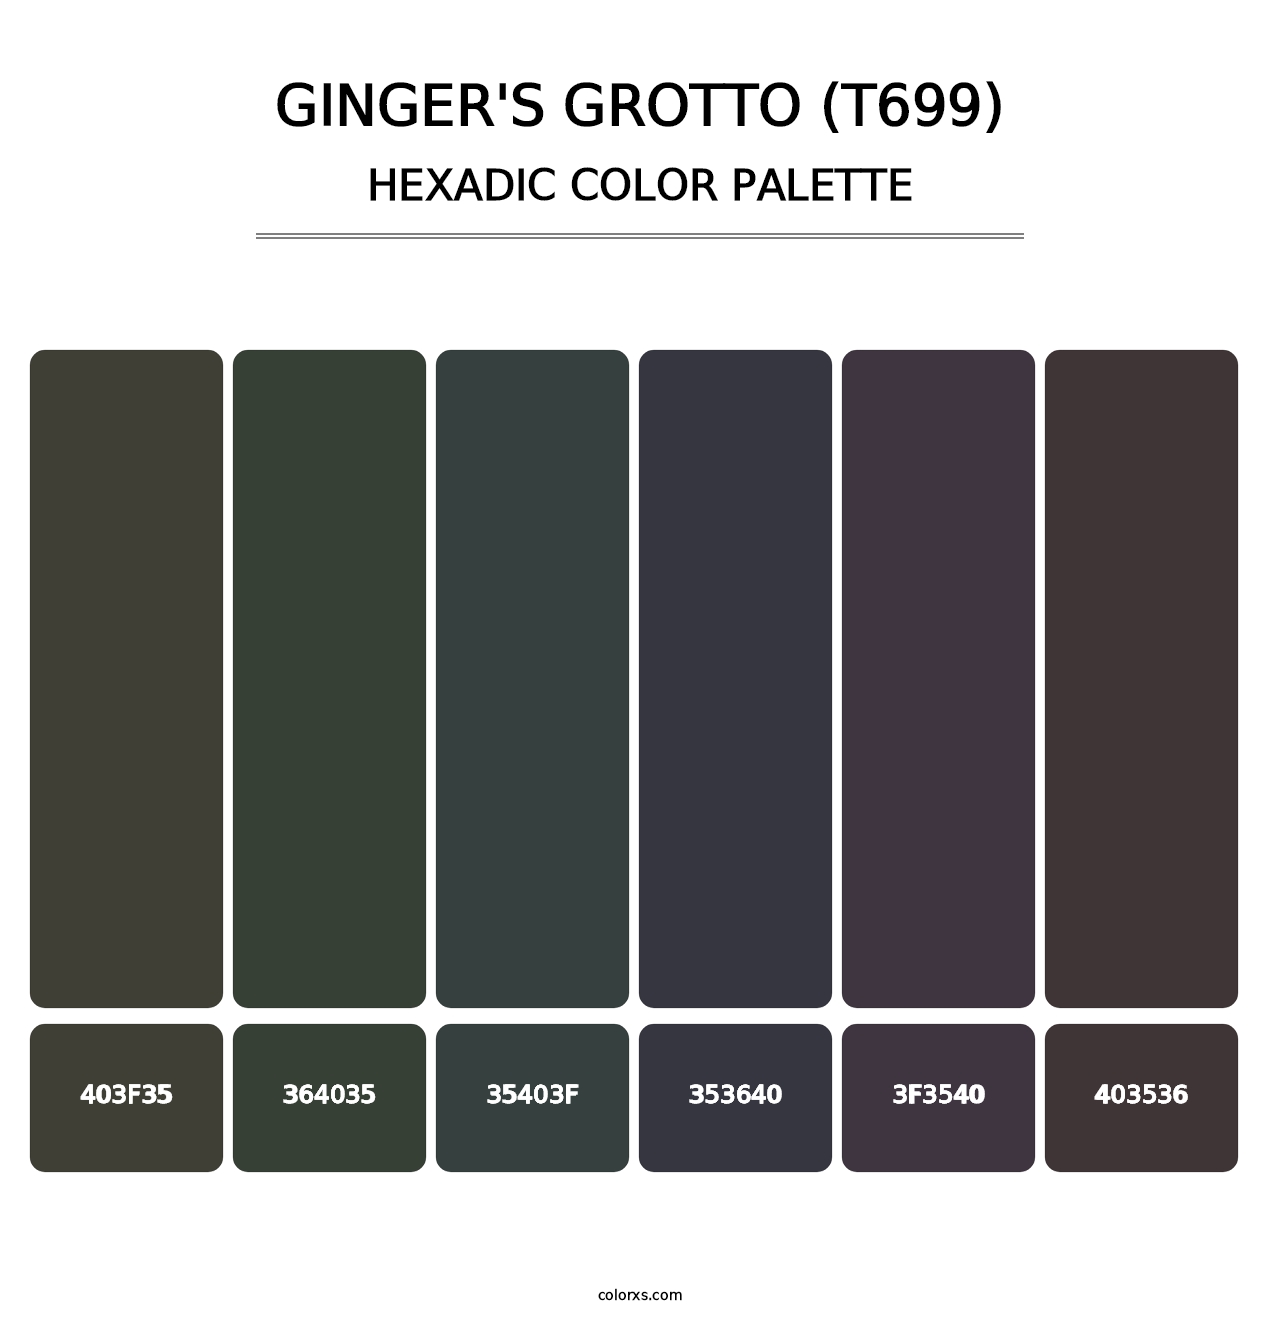 Ginger's Grotto (T699) - Hexadic Color Palette